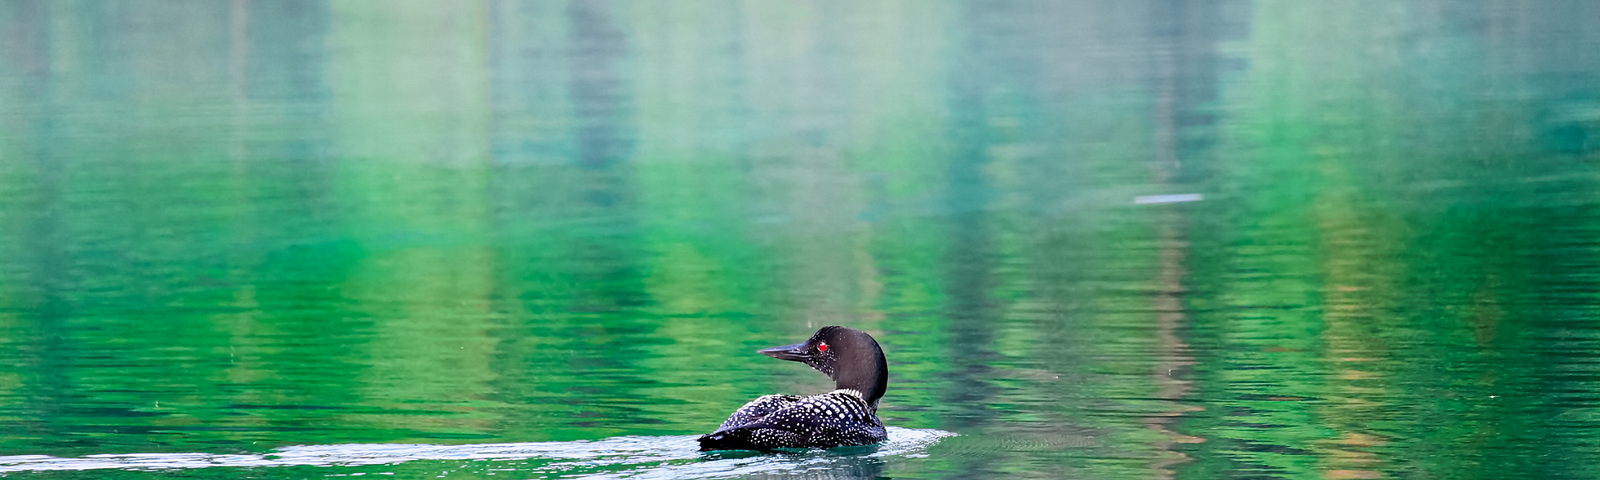 A loon on a still lake reflecting greenery